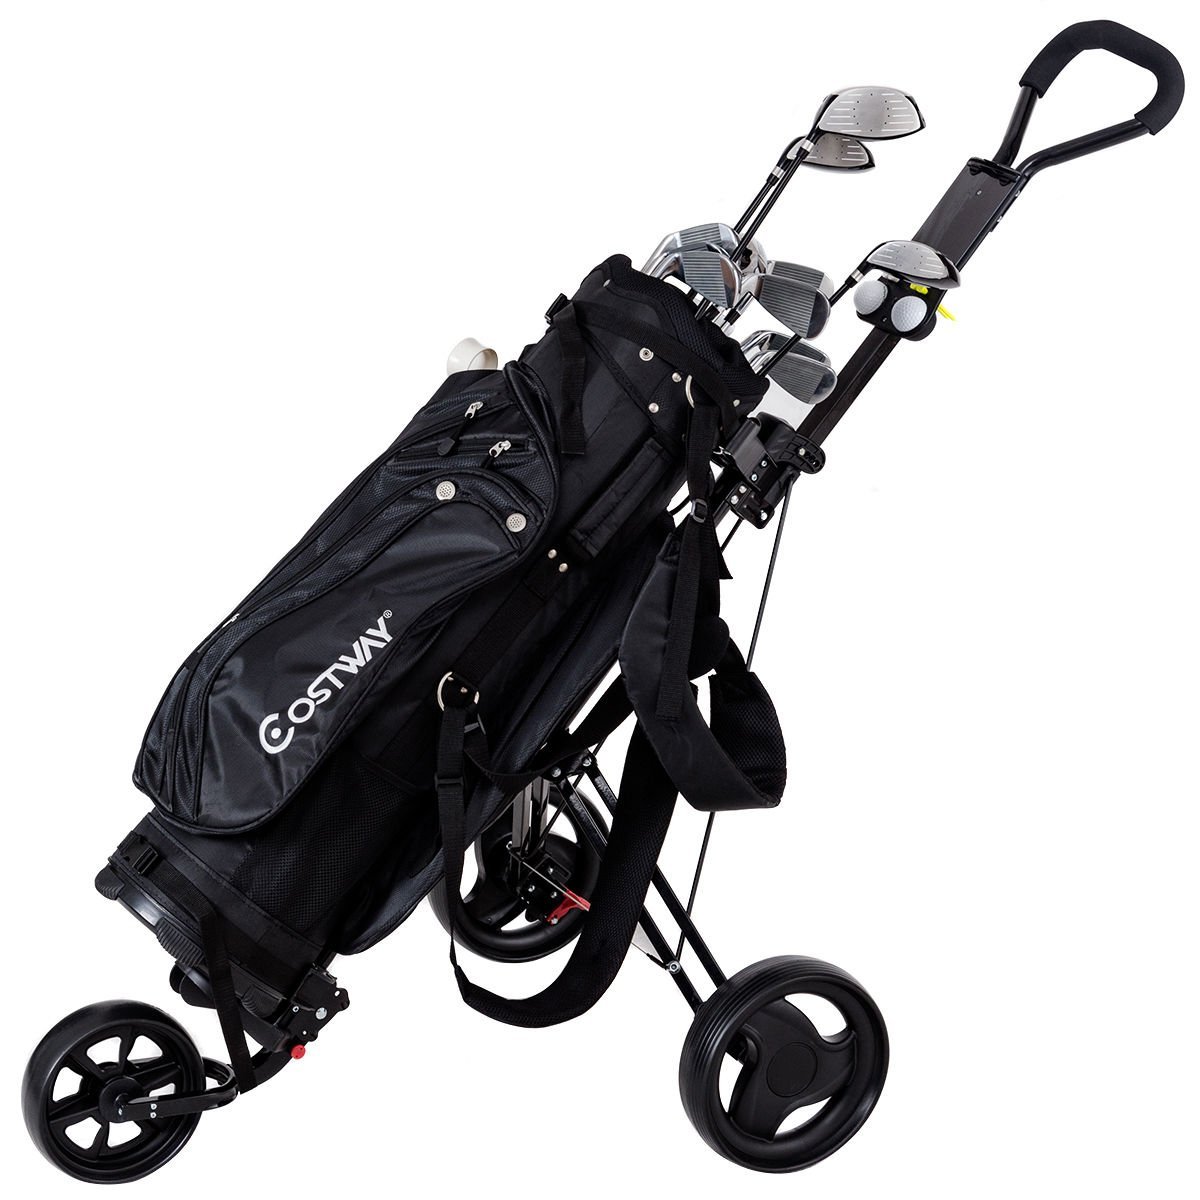 Tangkula Lightweight Foldable 3 Wheel Golf Club Push Pull Trolley Carts